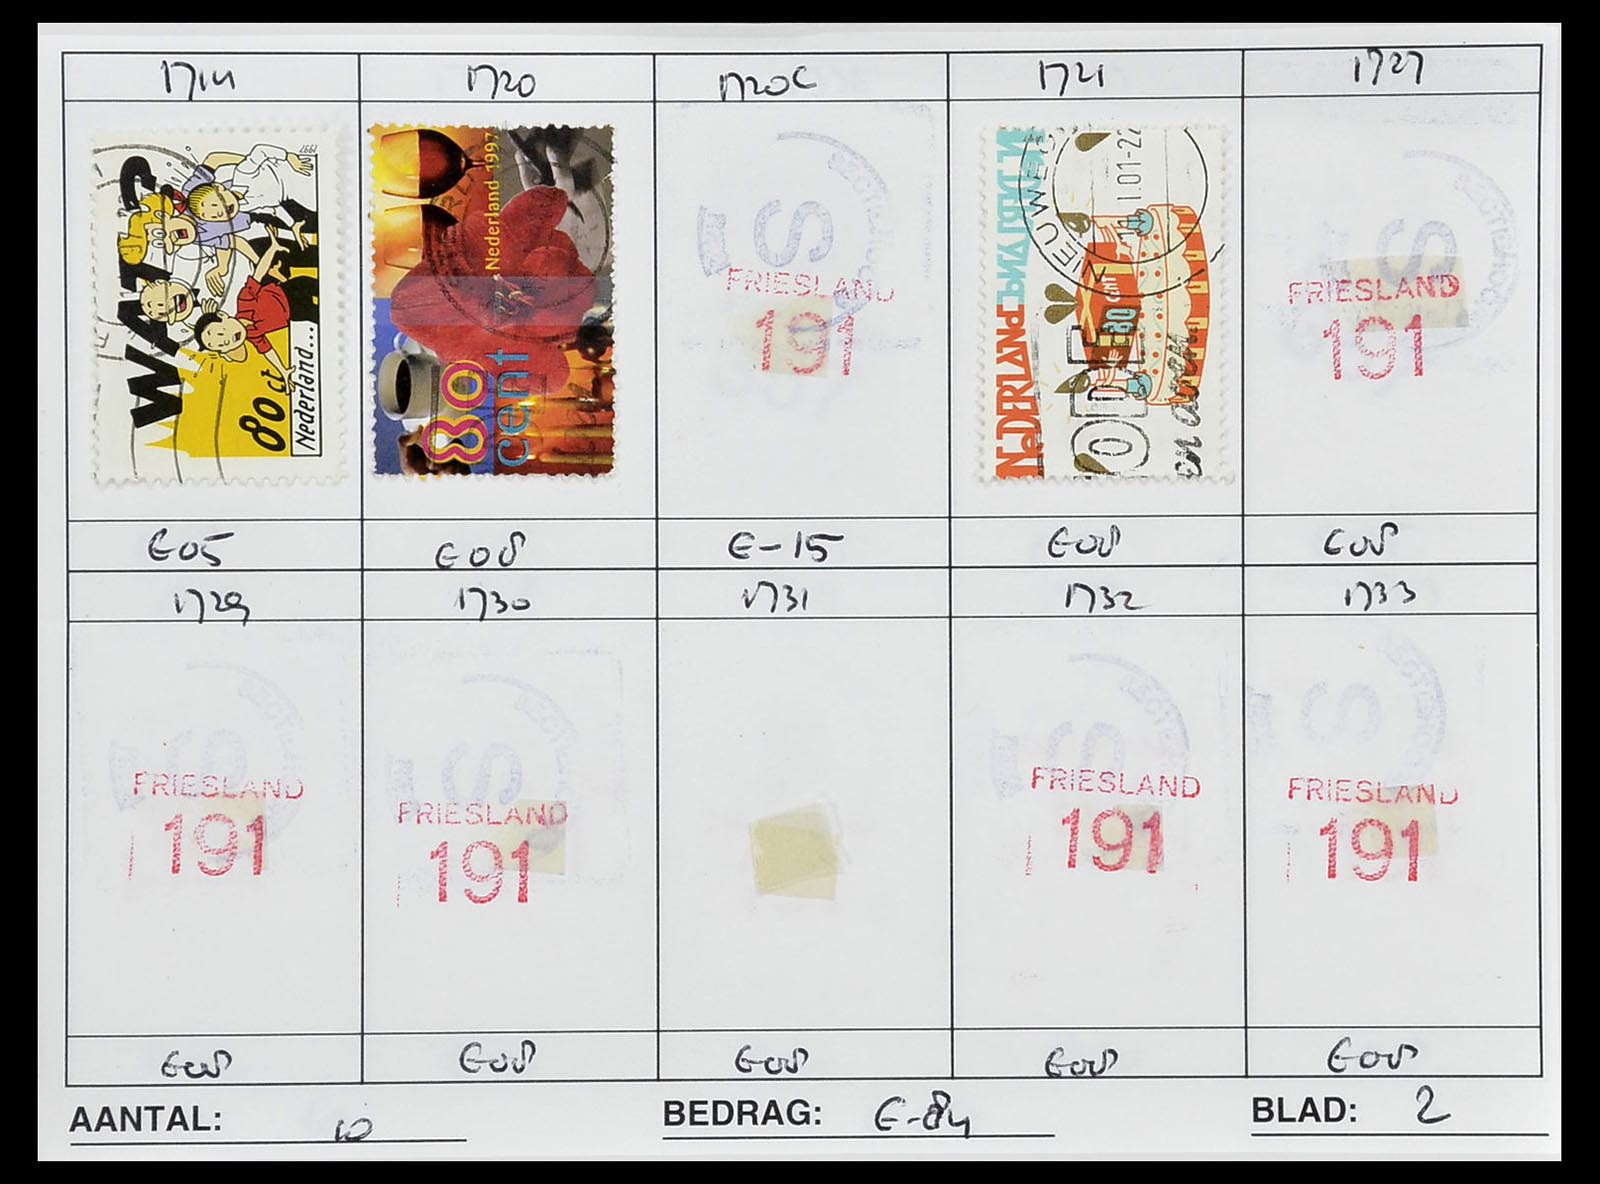 34612 0990 - Stamp Collection 34612 Wereld rondzendboekjes.